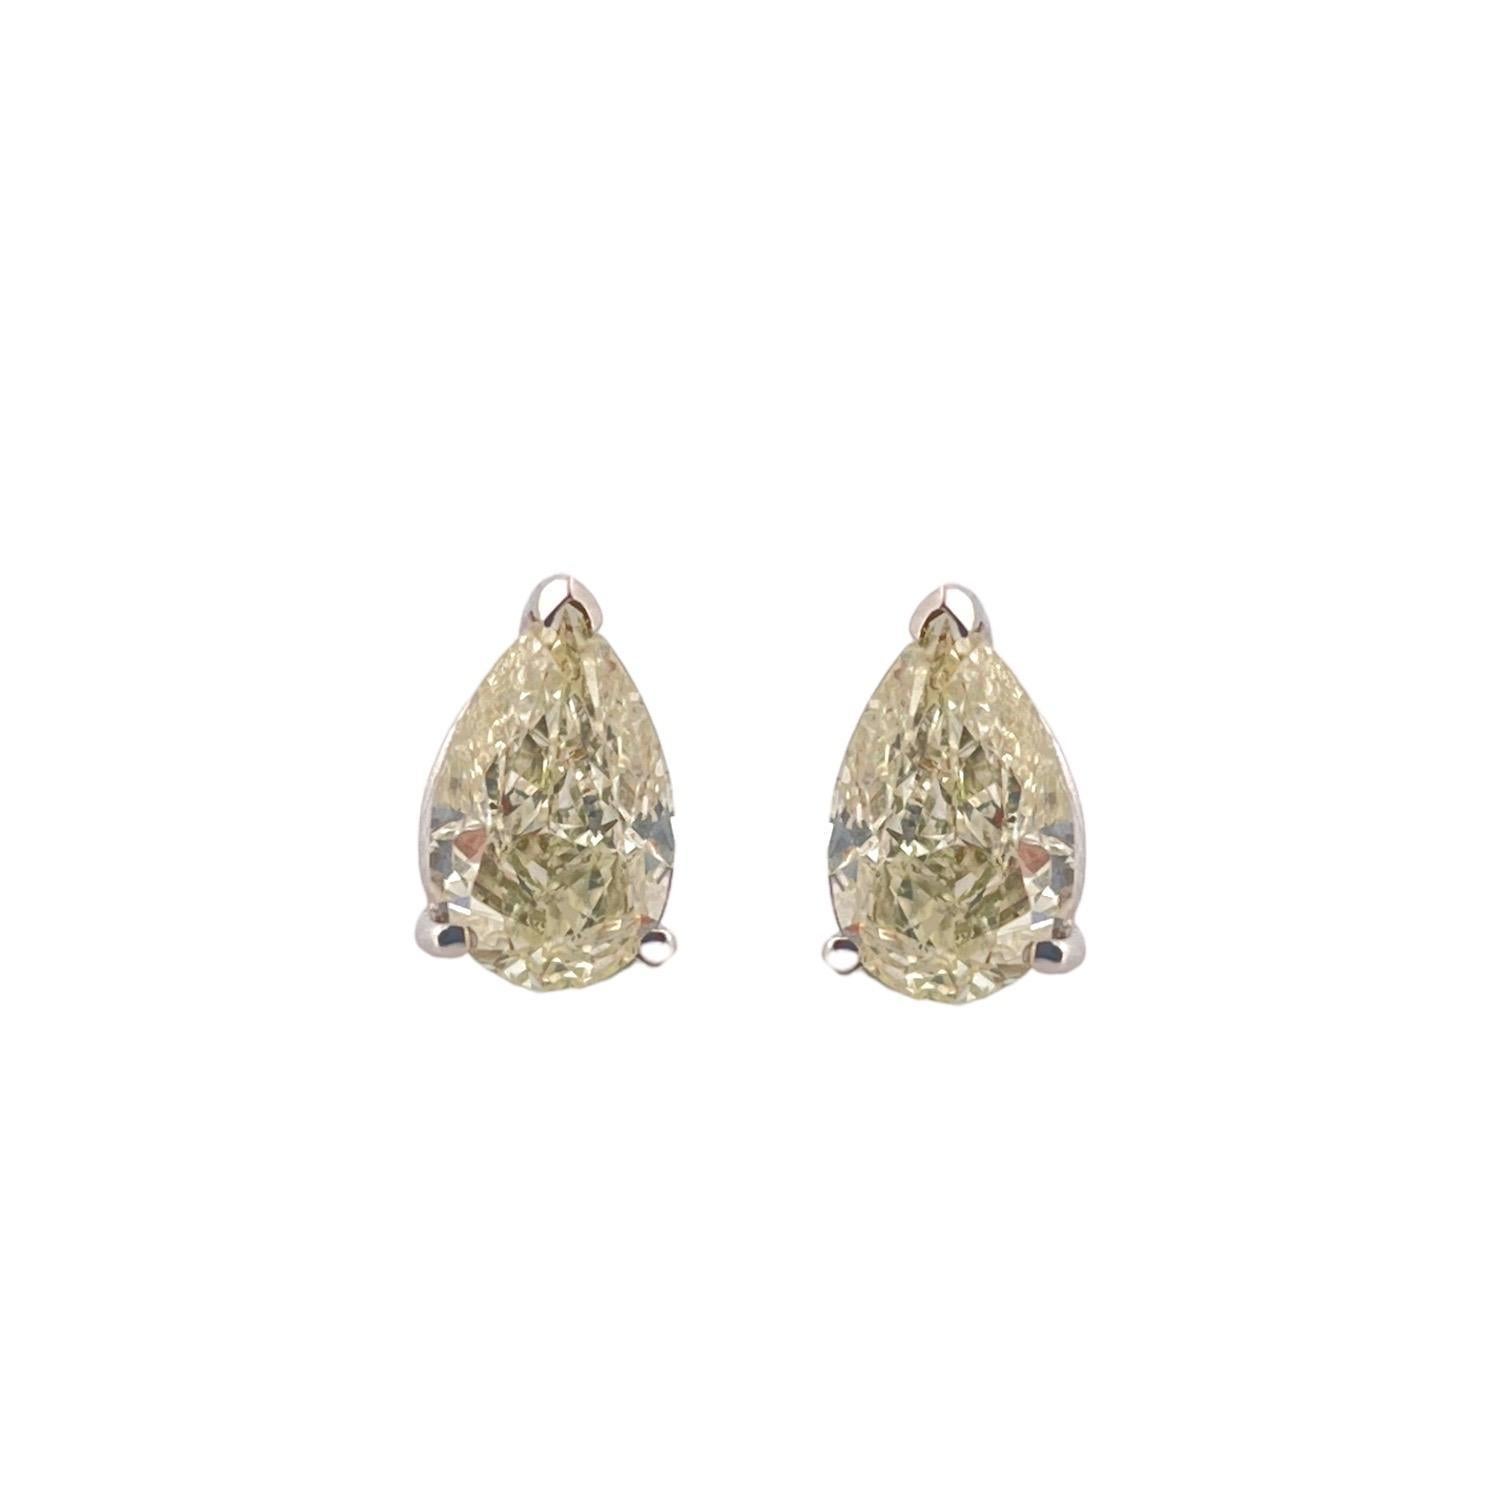 Brilliant Cut Classic Pear Diamond Stud Earrings - 2.04 TCW, 14K White Gold